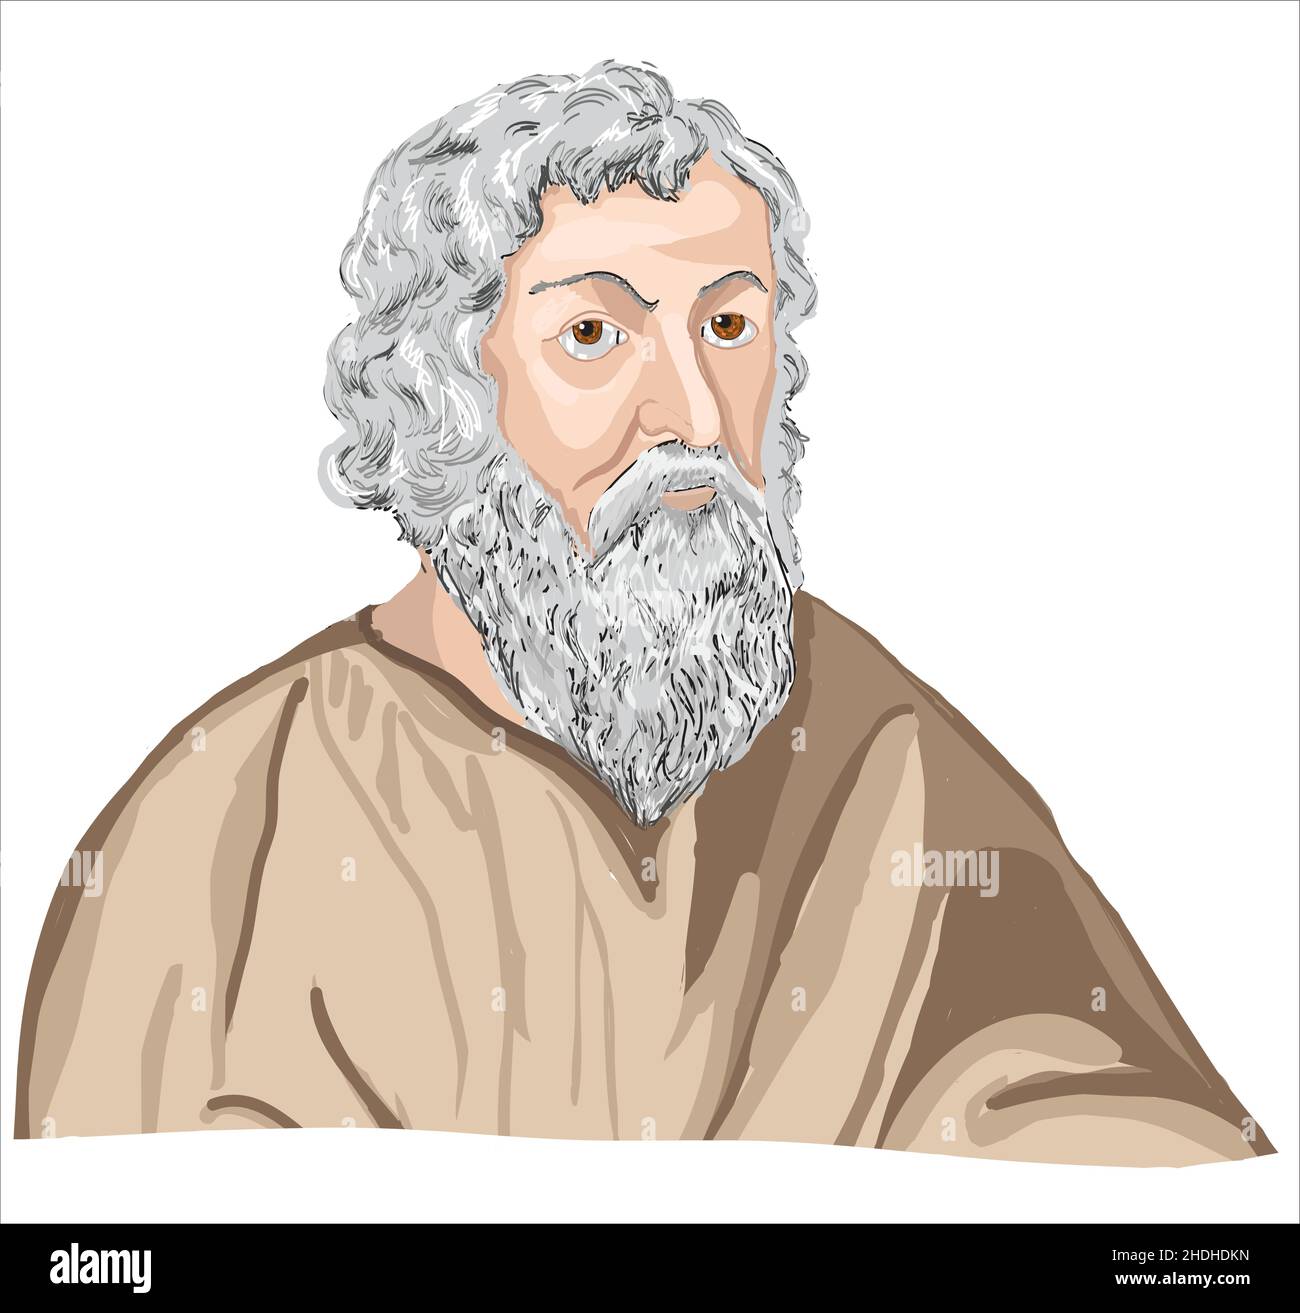 Hippocrates (460-370 BC) portrait in line art illustration. Stock Vector